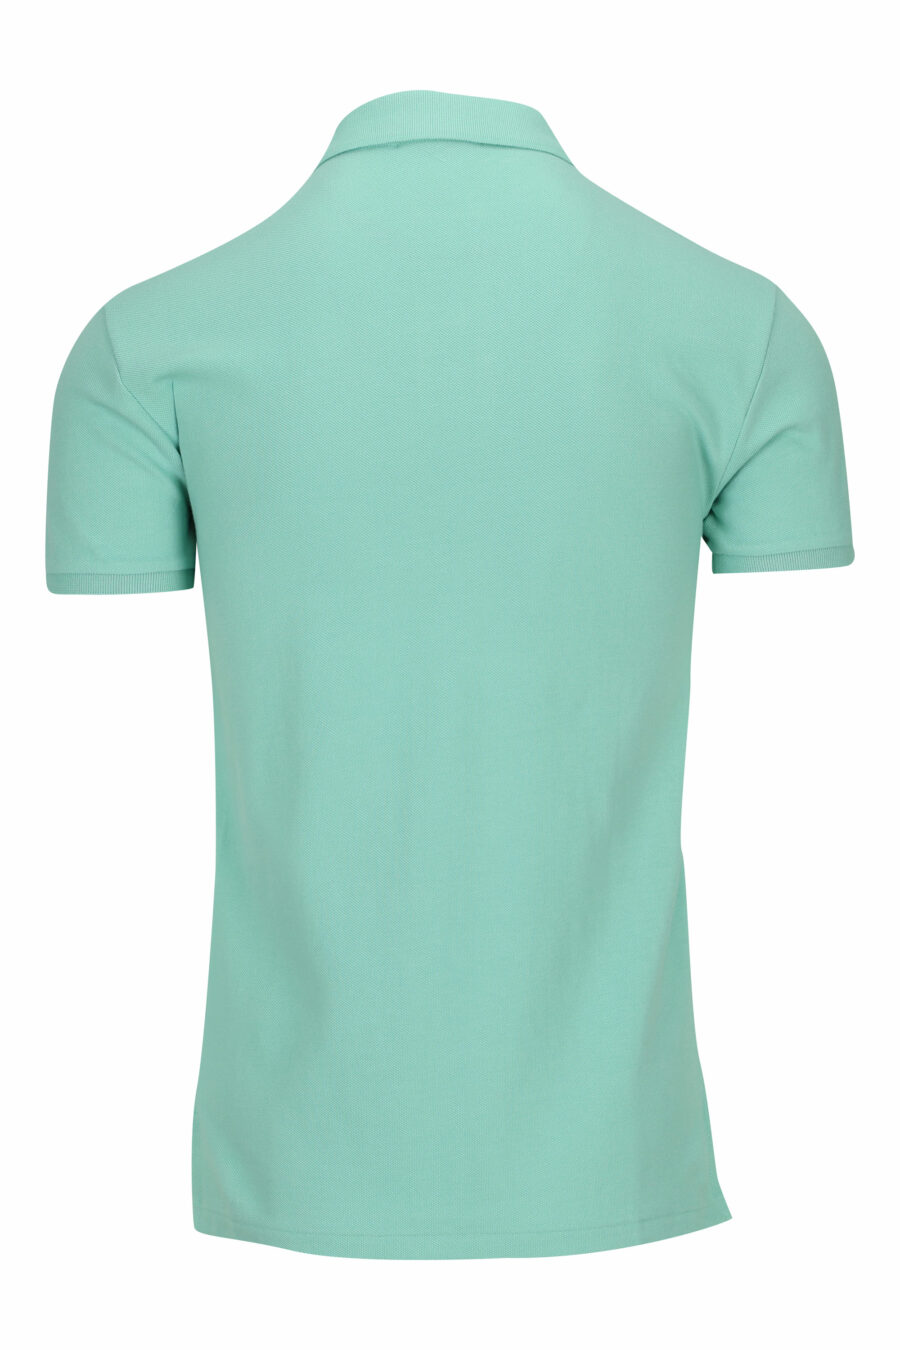 Turquoise polo shirt with blue "polo" mini-logo - 3616536209366 1